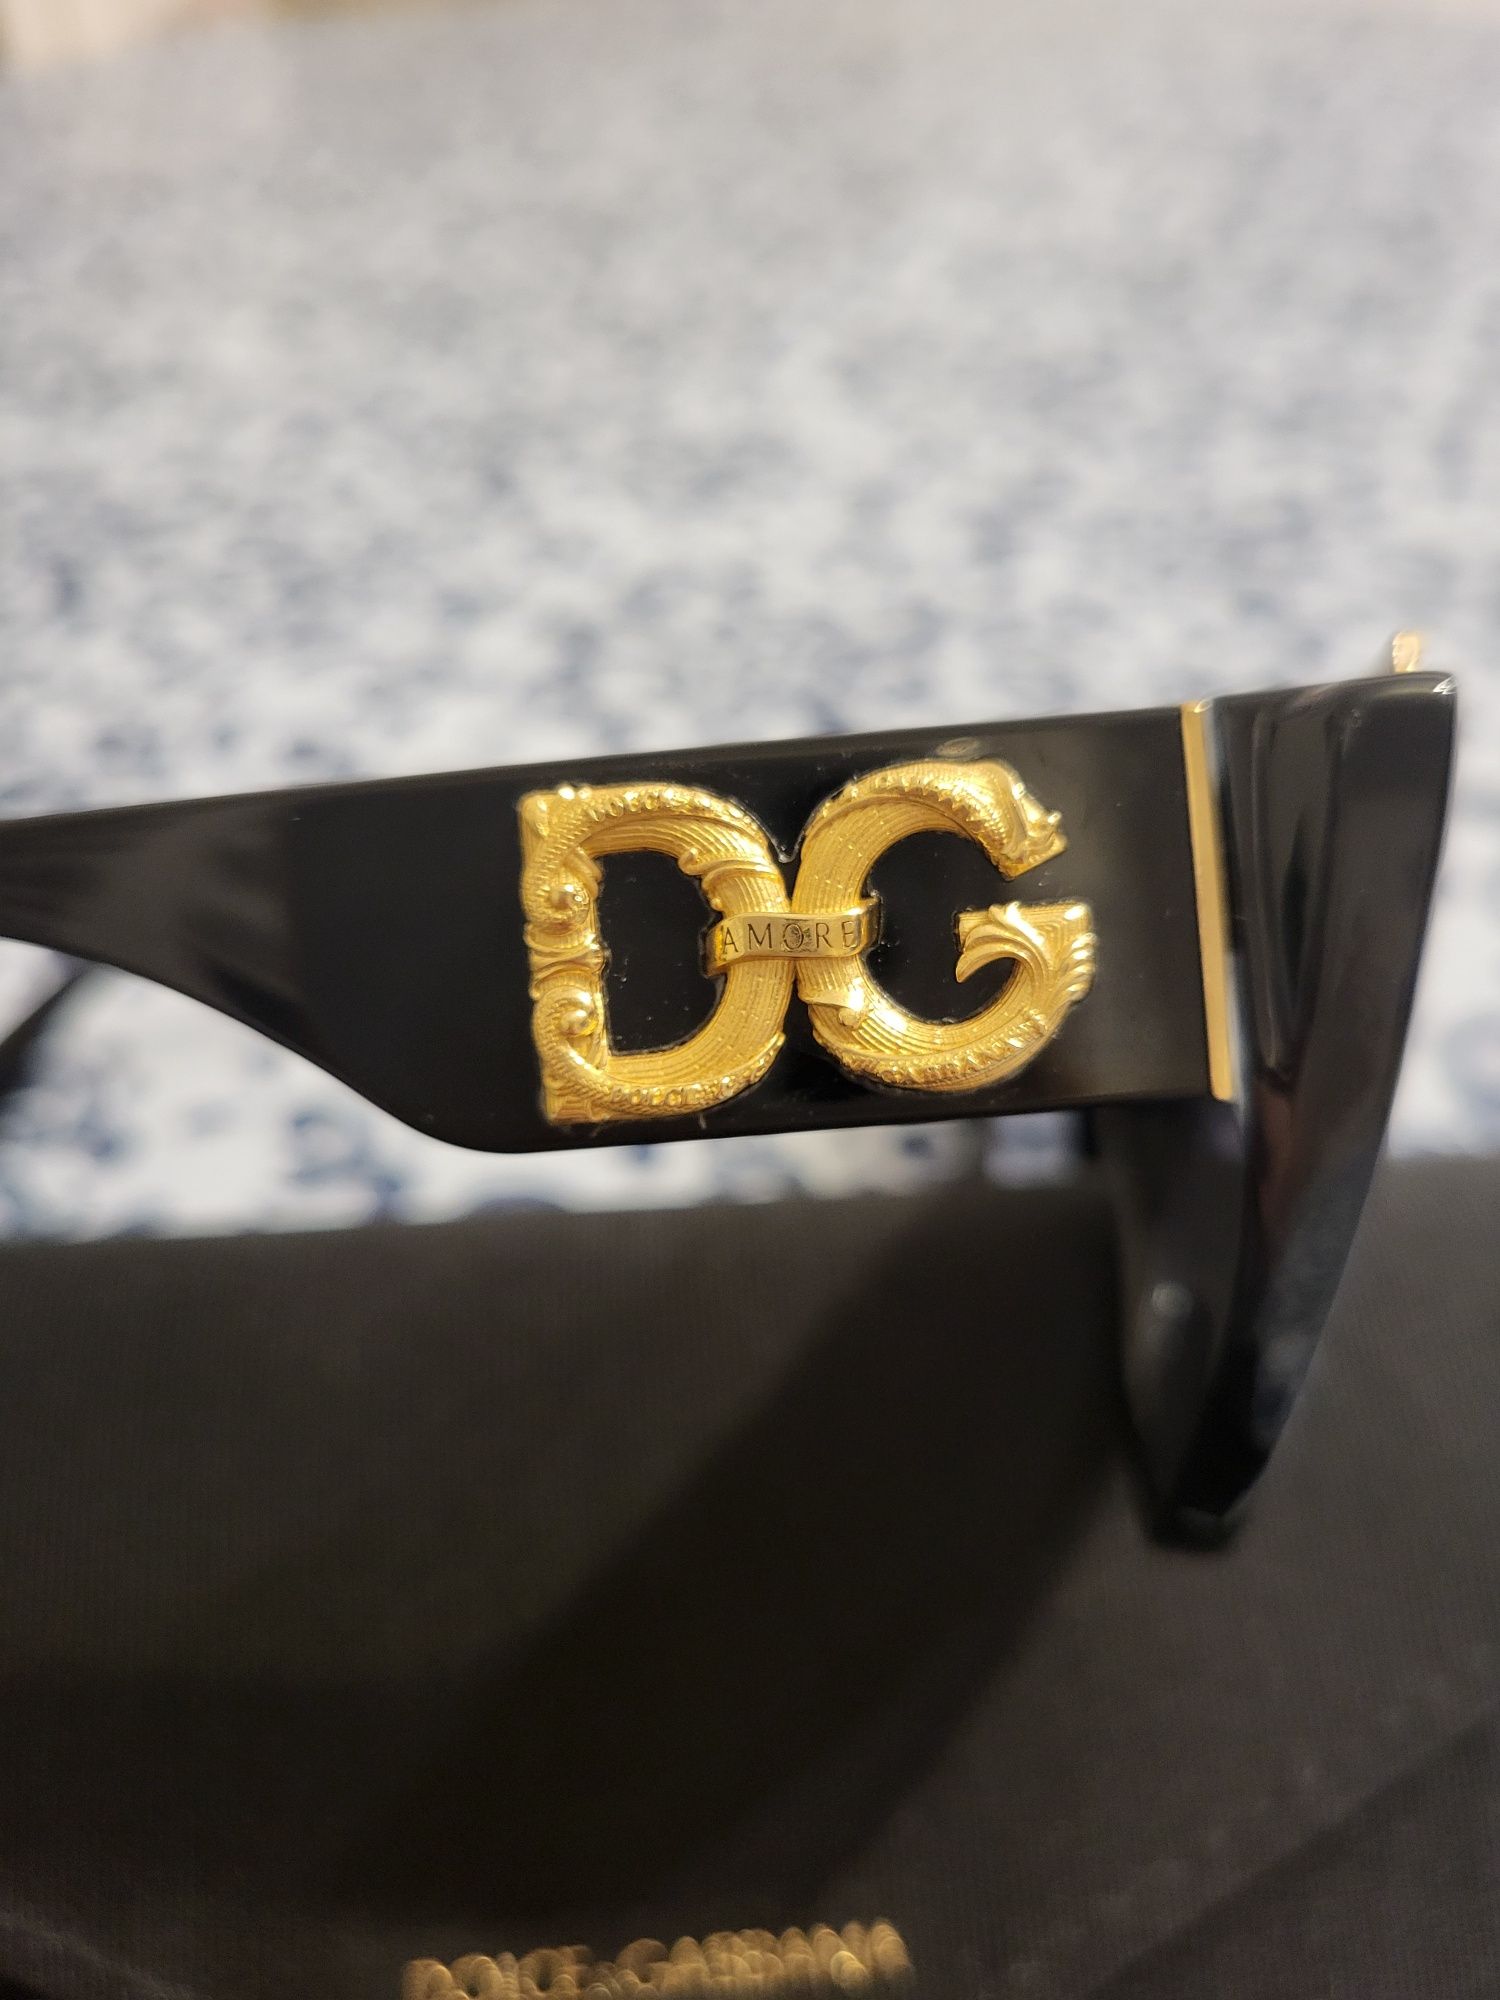 Дамски очила Dolce &Gabbana